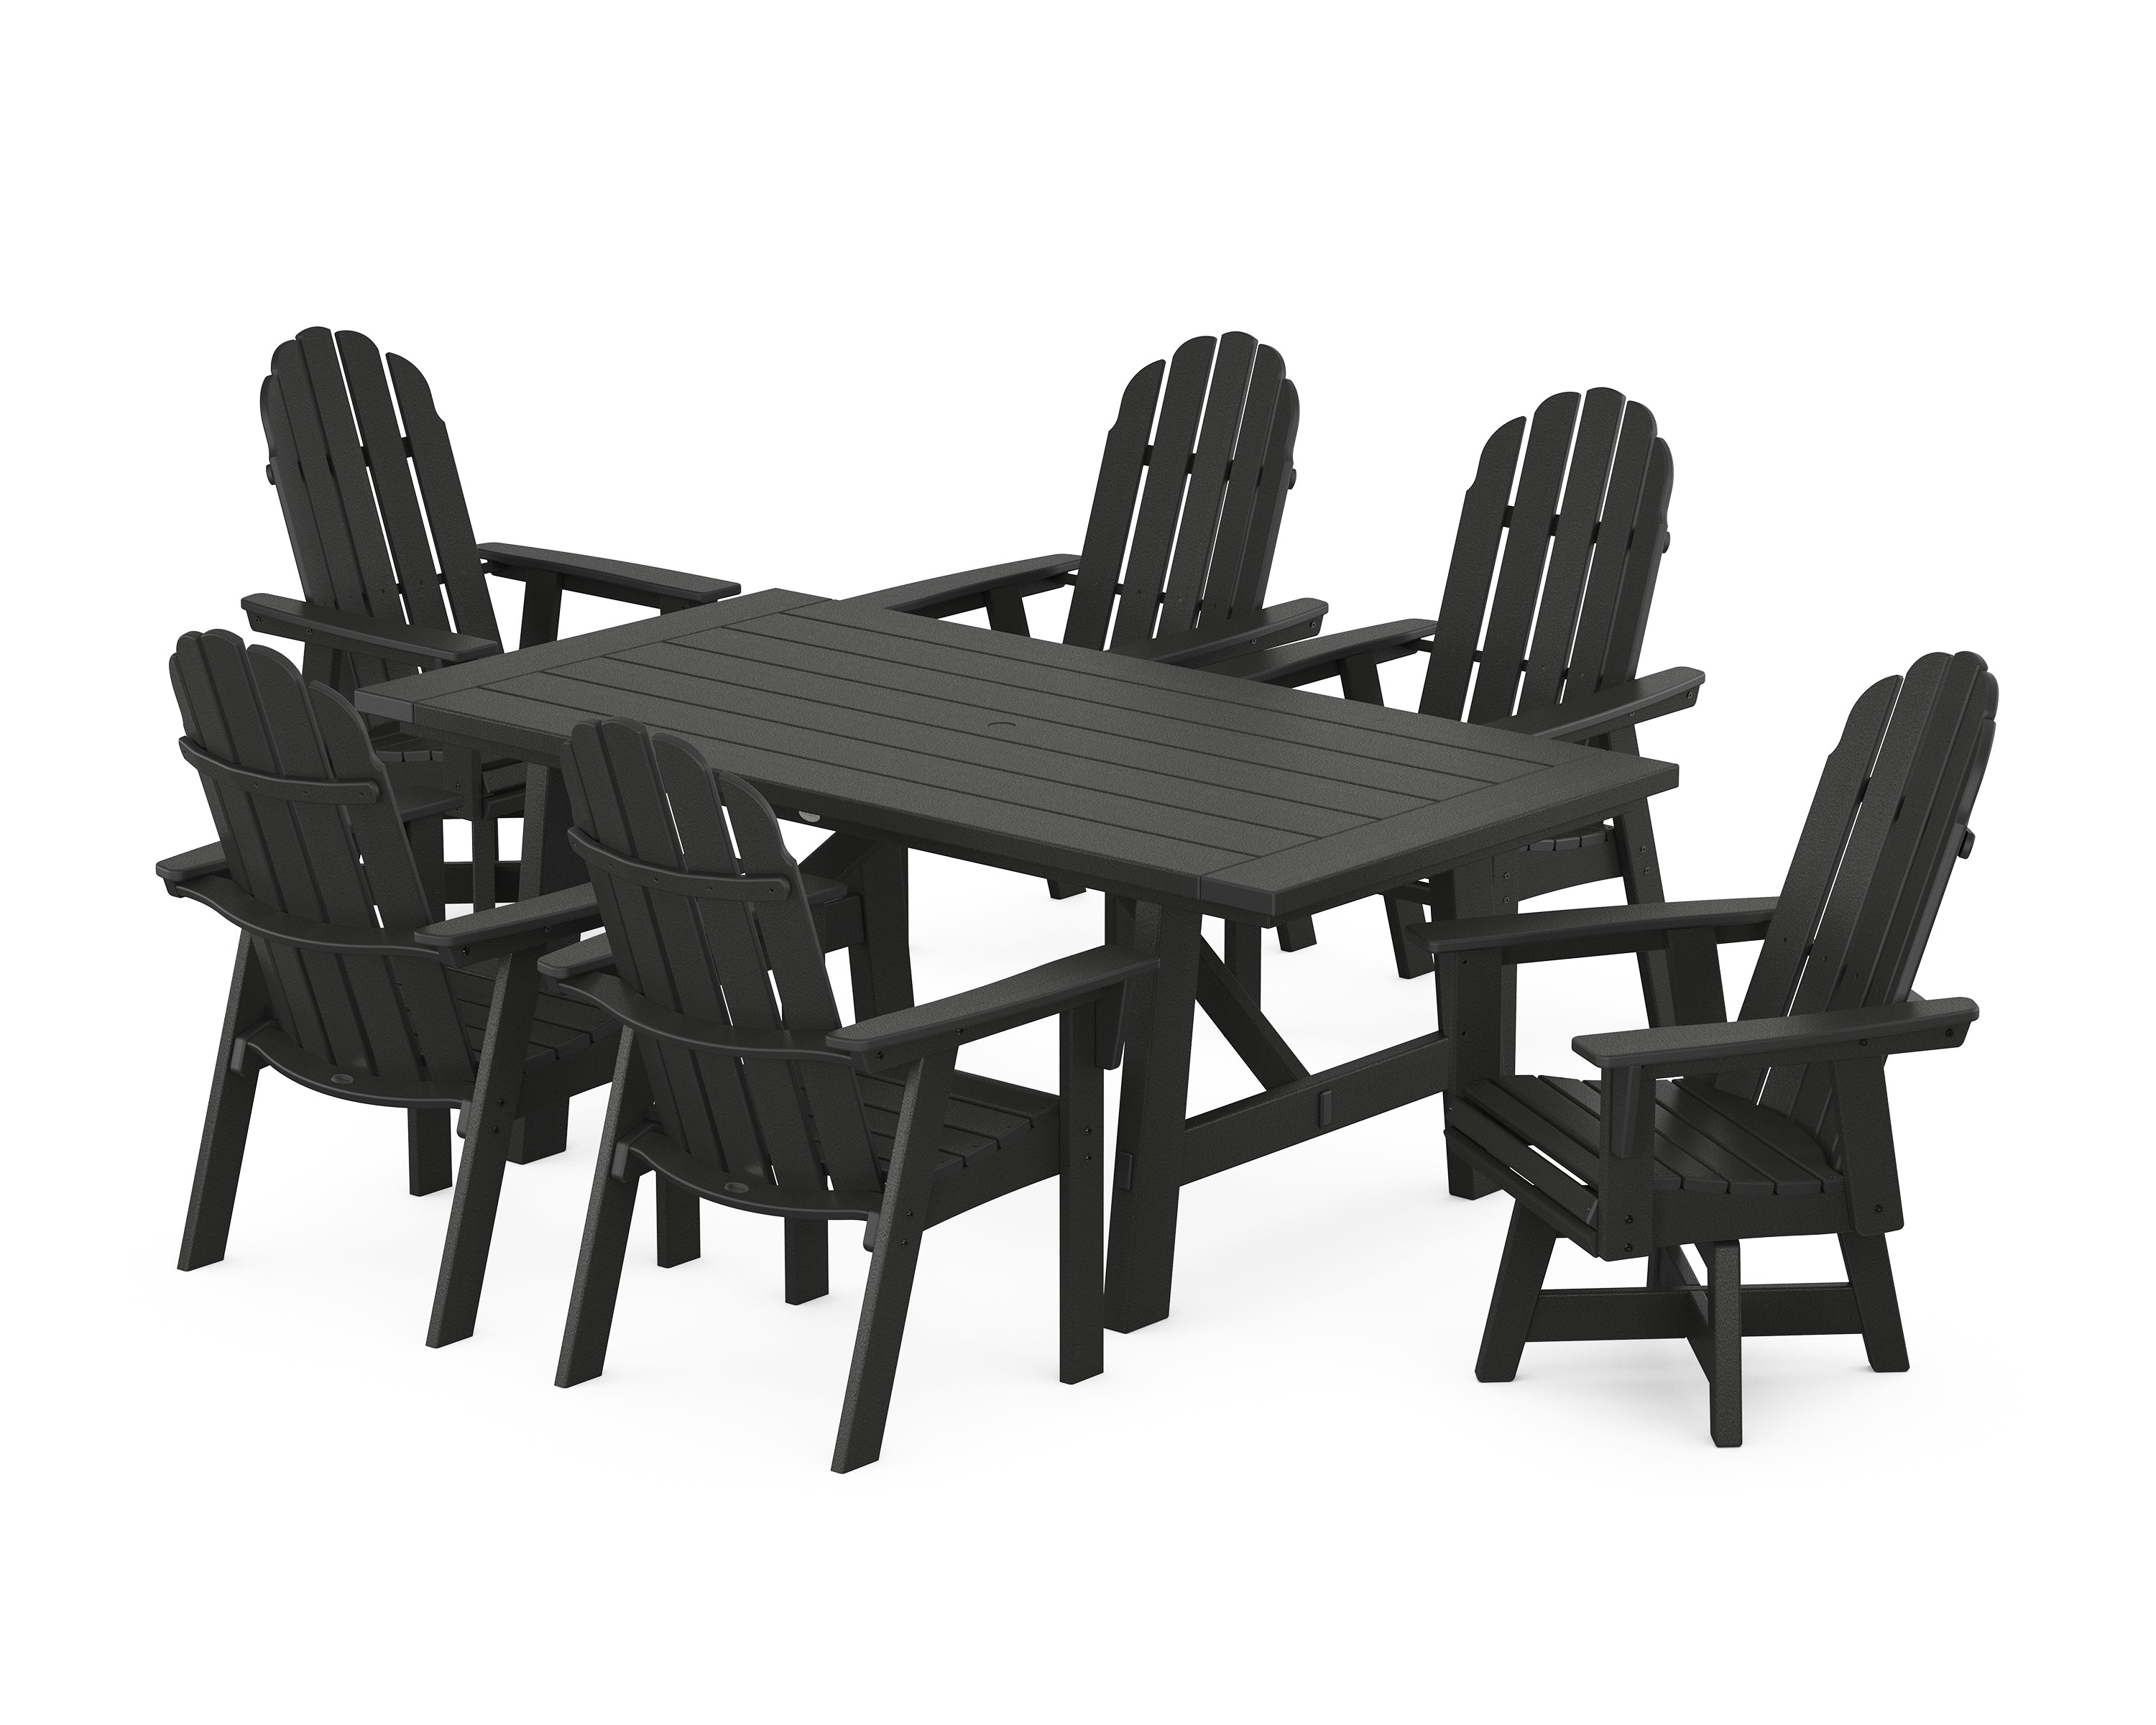 POLYWOOD® Vineyard Curveback Adirondack Swivel Chair 7-Piece Rustic Farmhouse Dining Set in Black